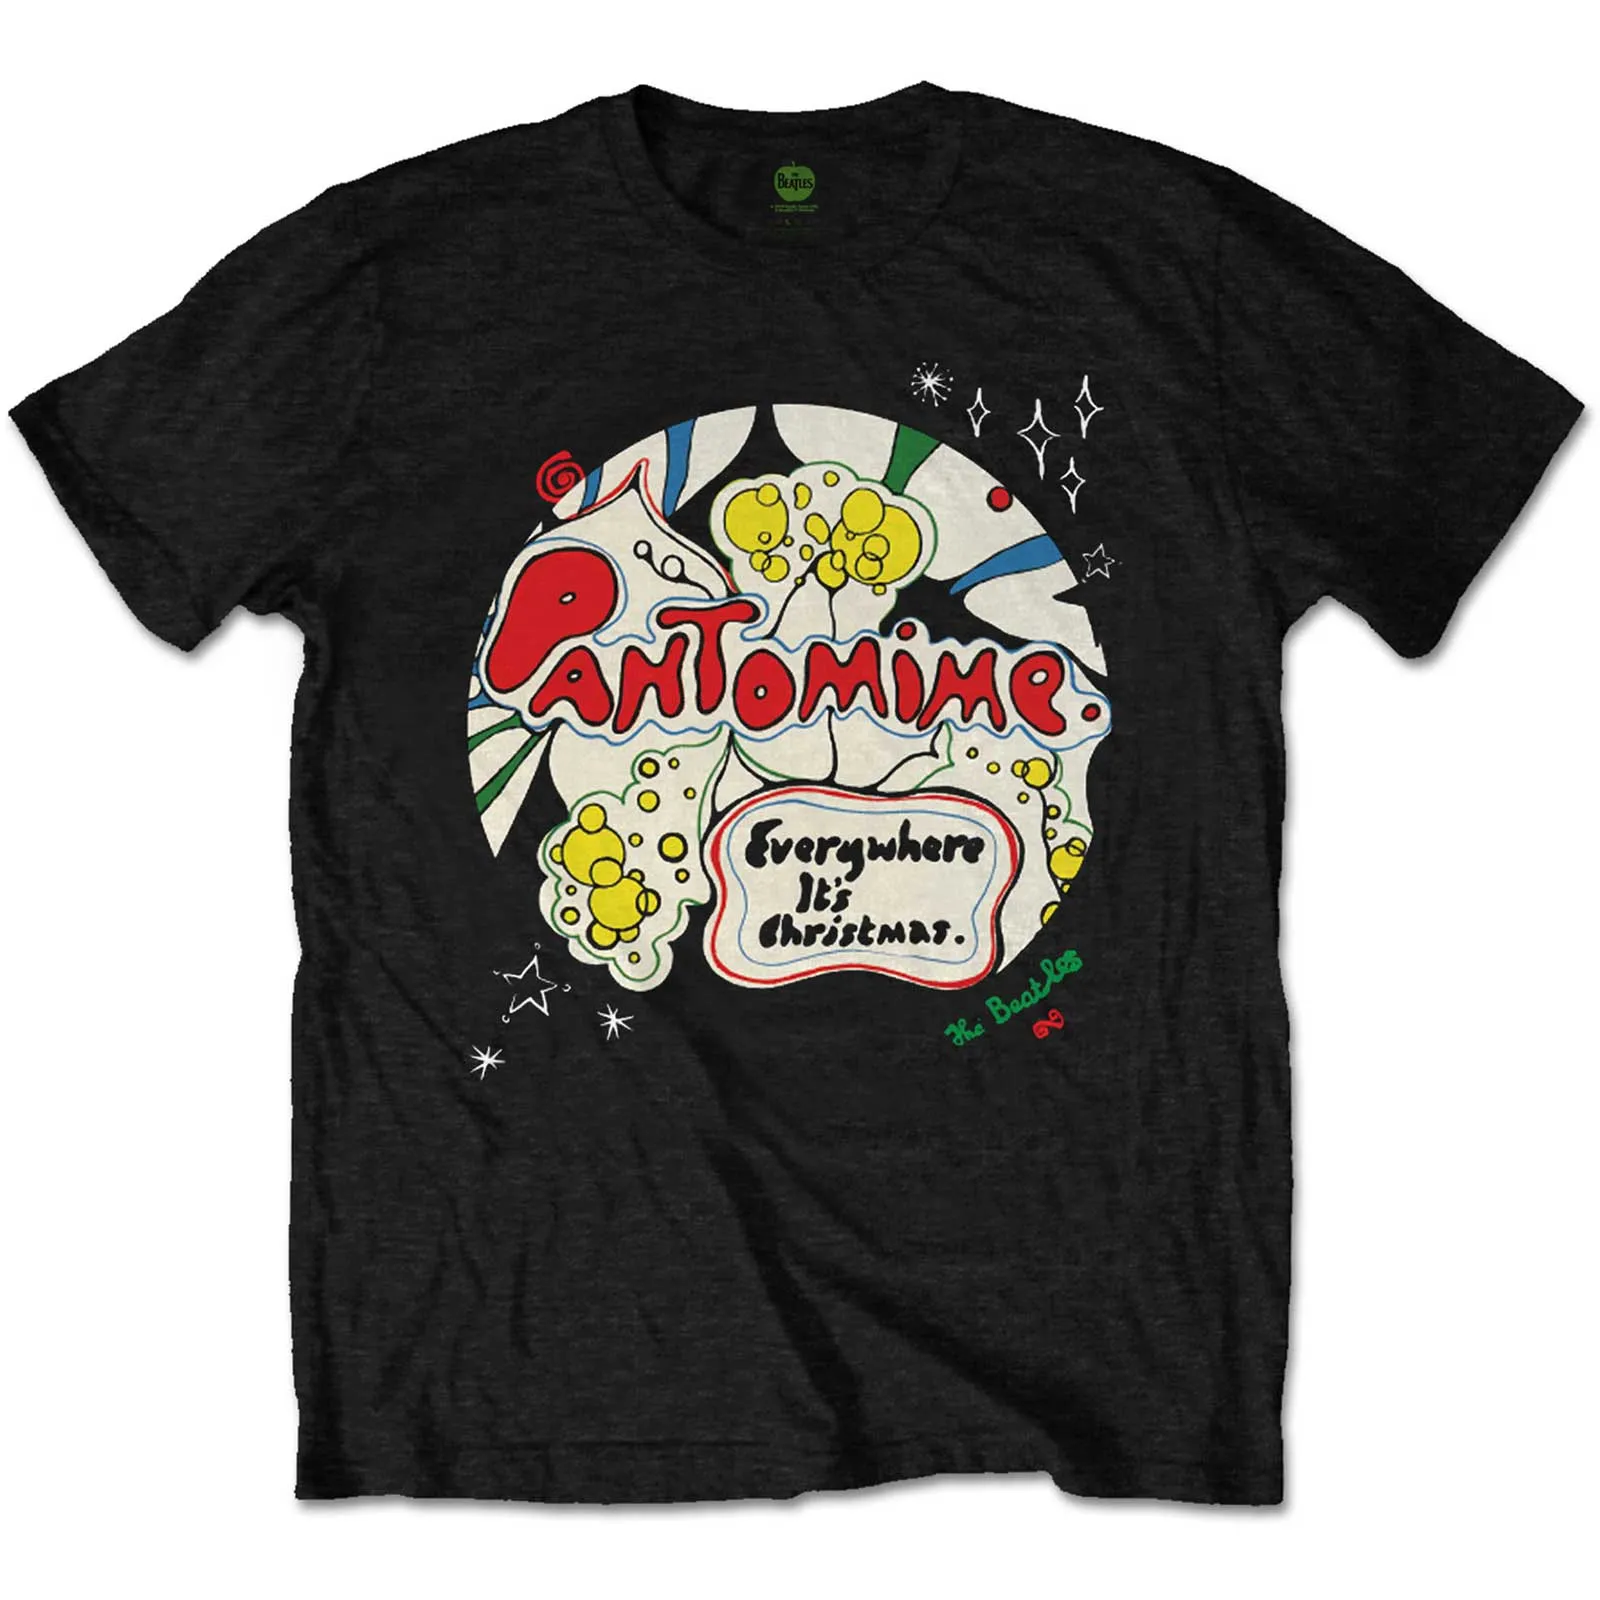 The Beatles - Unisex T-Shirt Pantomine artwork